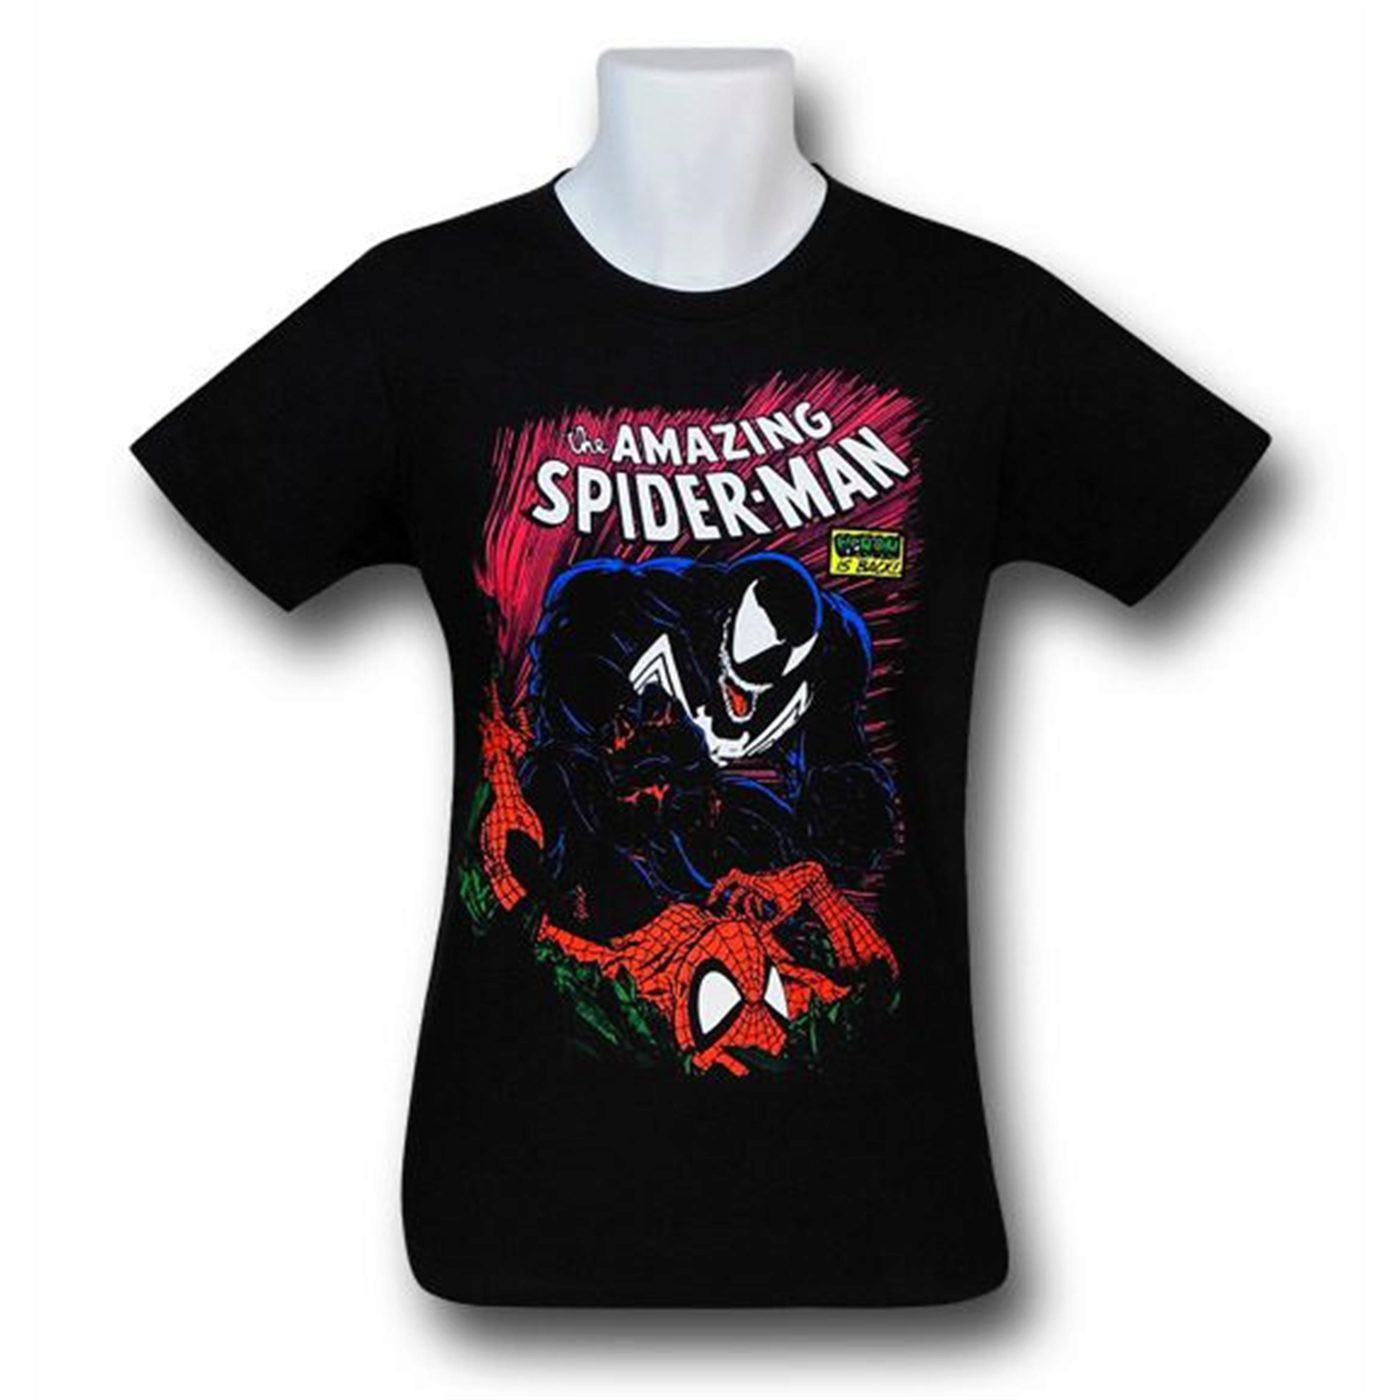 Spiderman #316 Venom Cover 30 Single T-Shirt